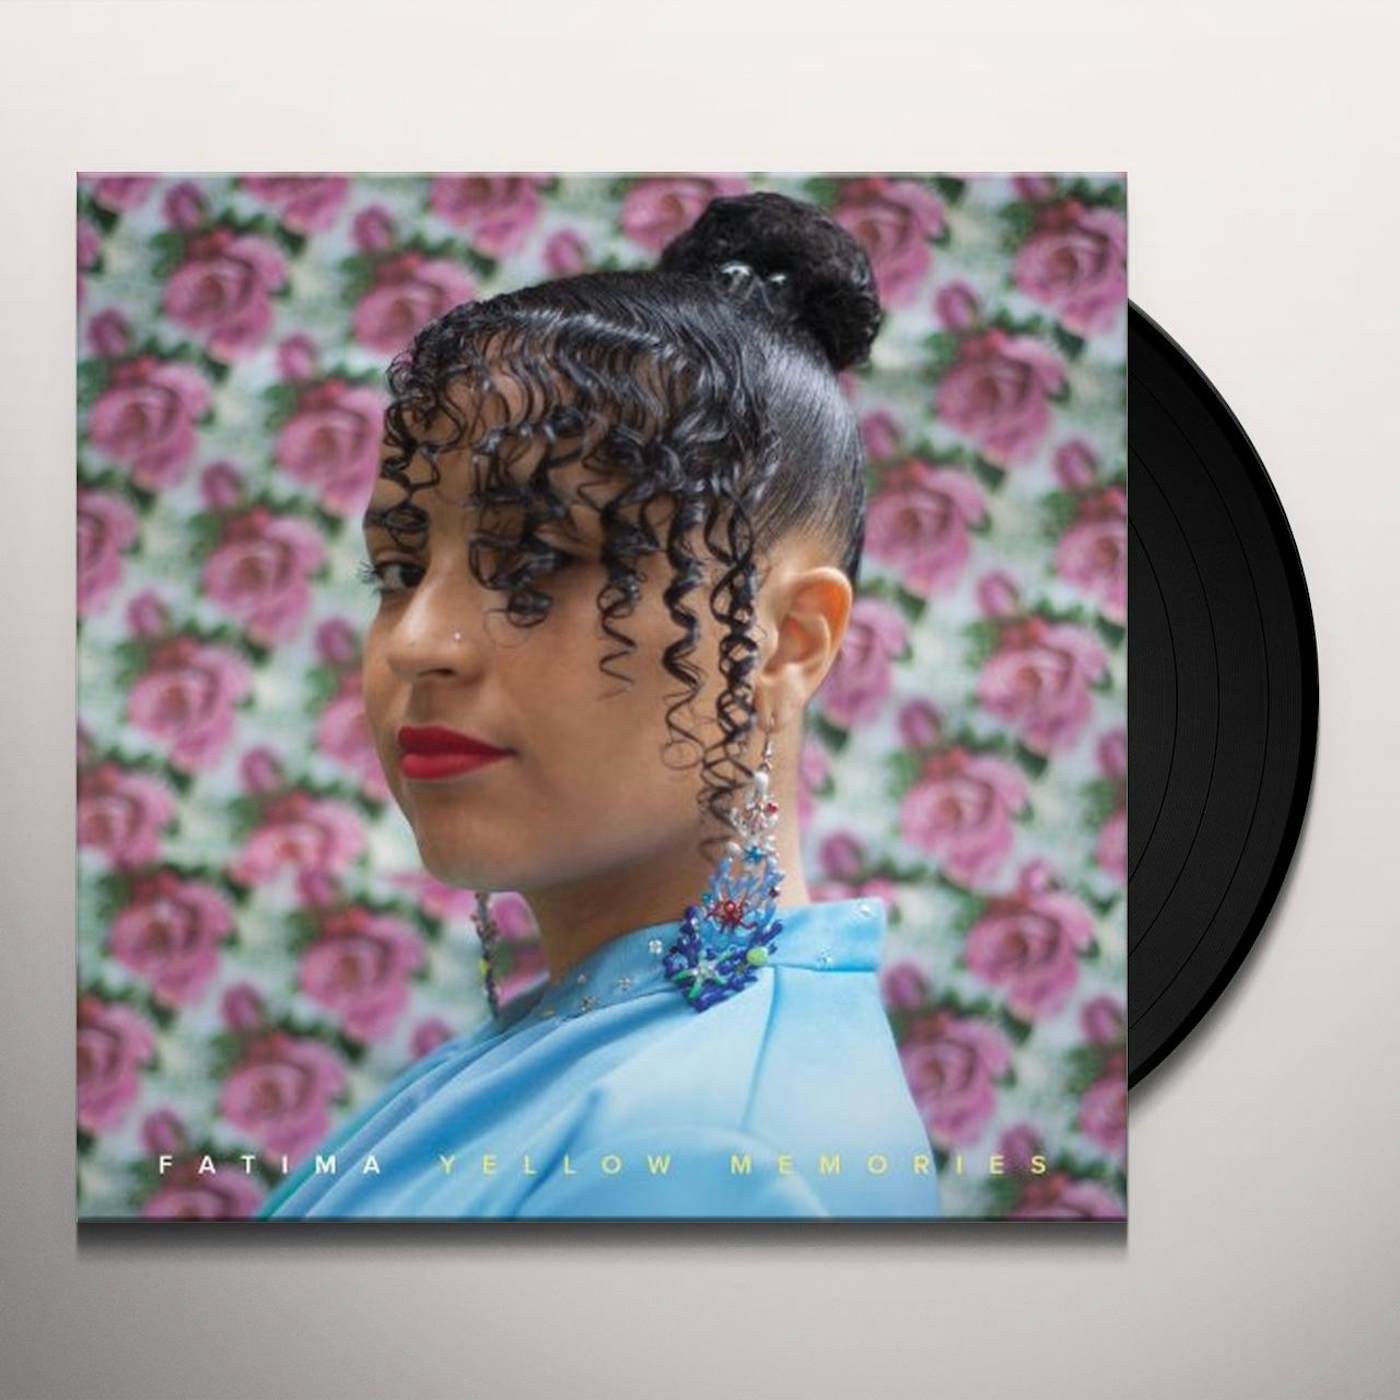 Fatima YELLOW MEMORIES Vinyl Record - UK Release